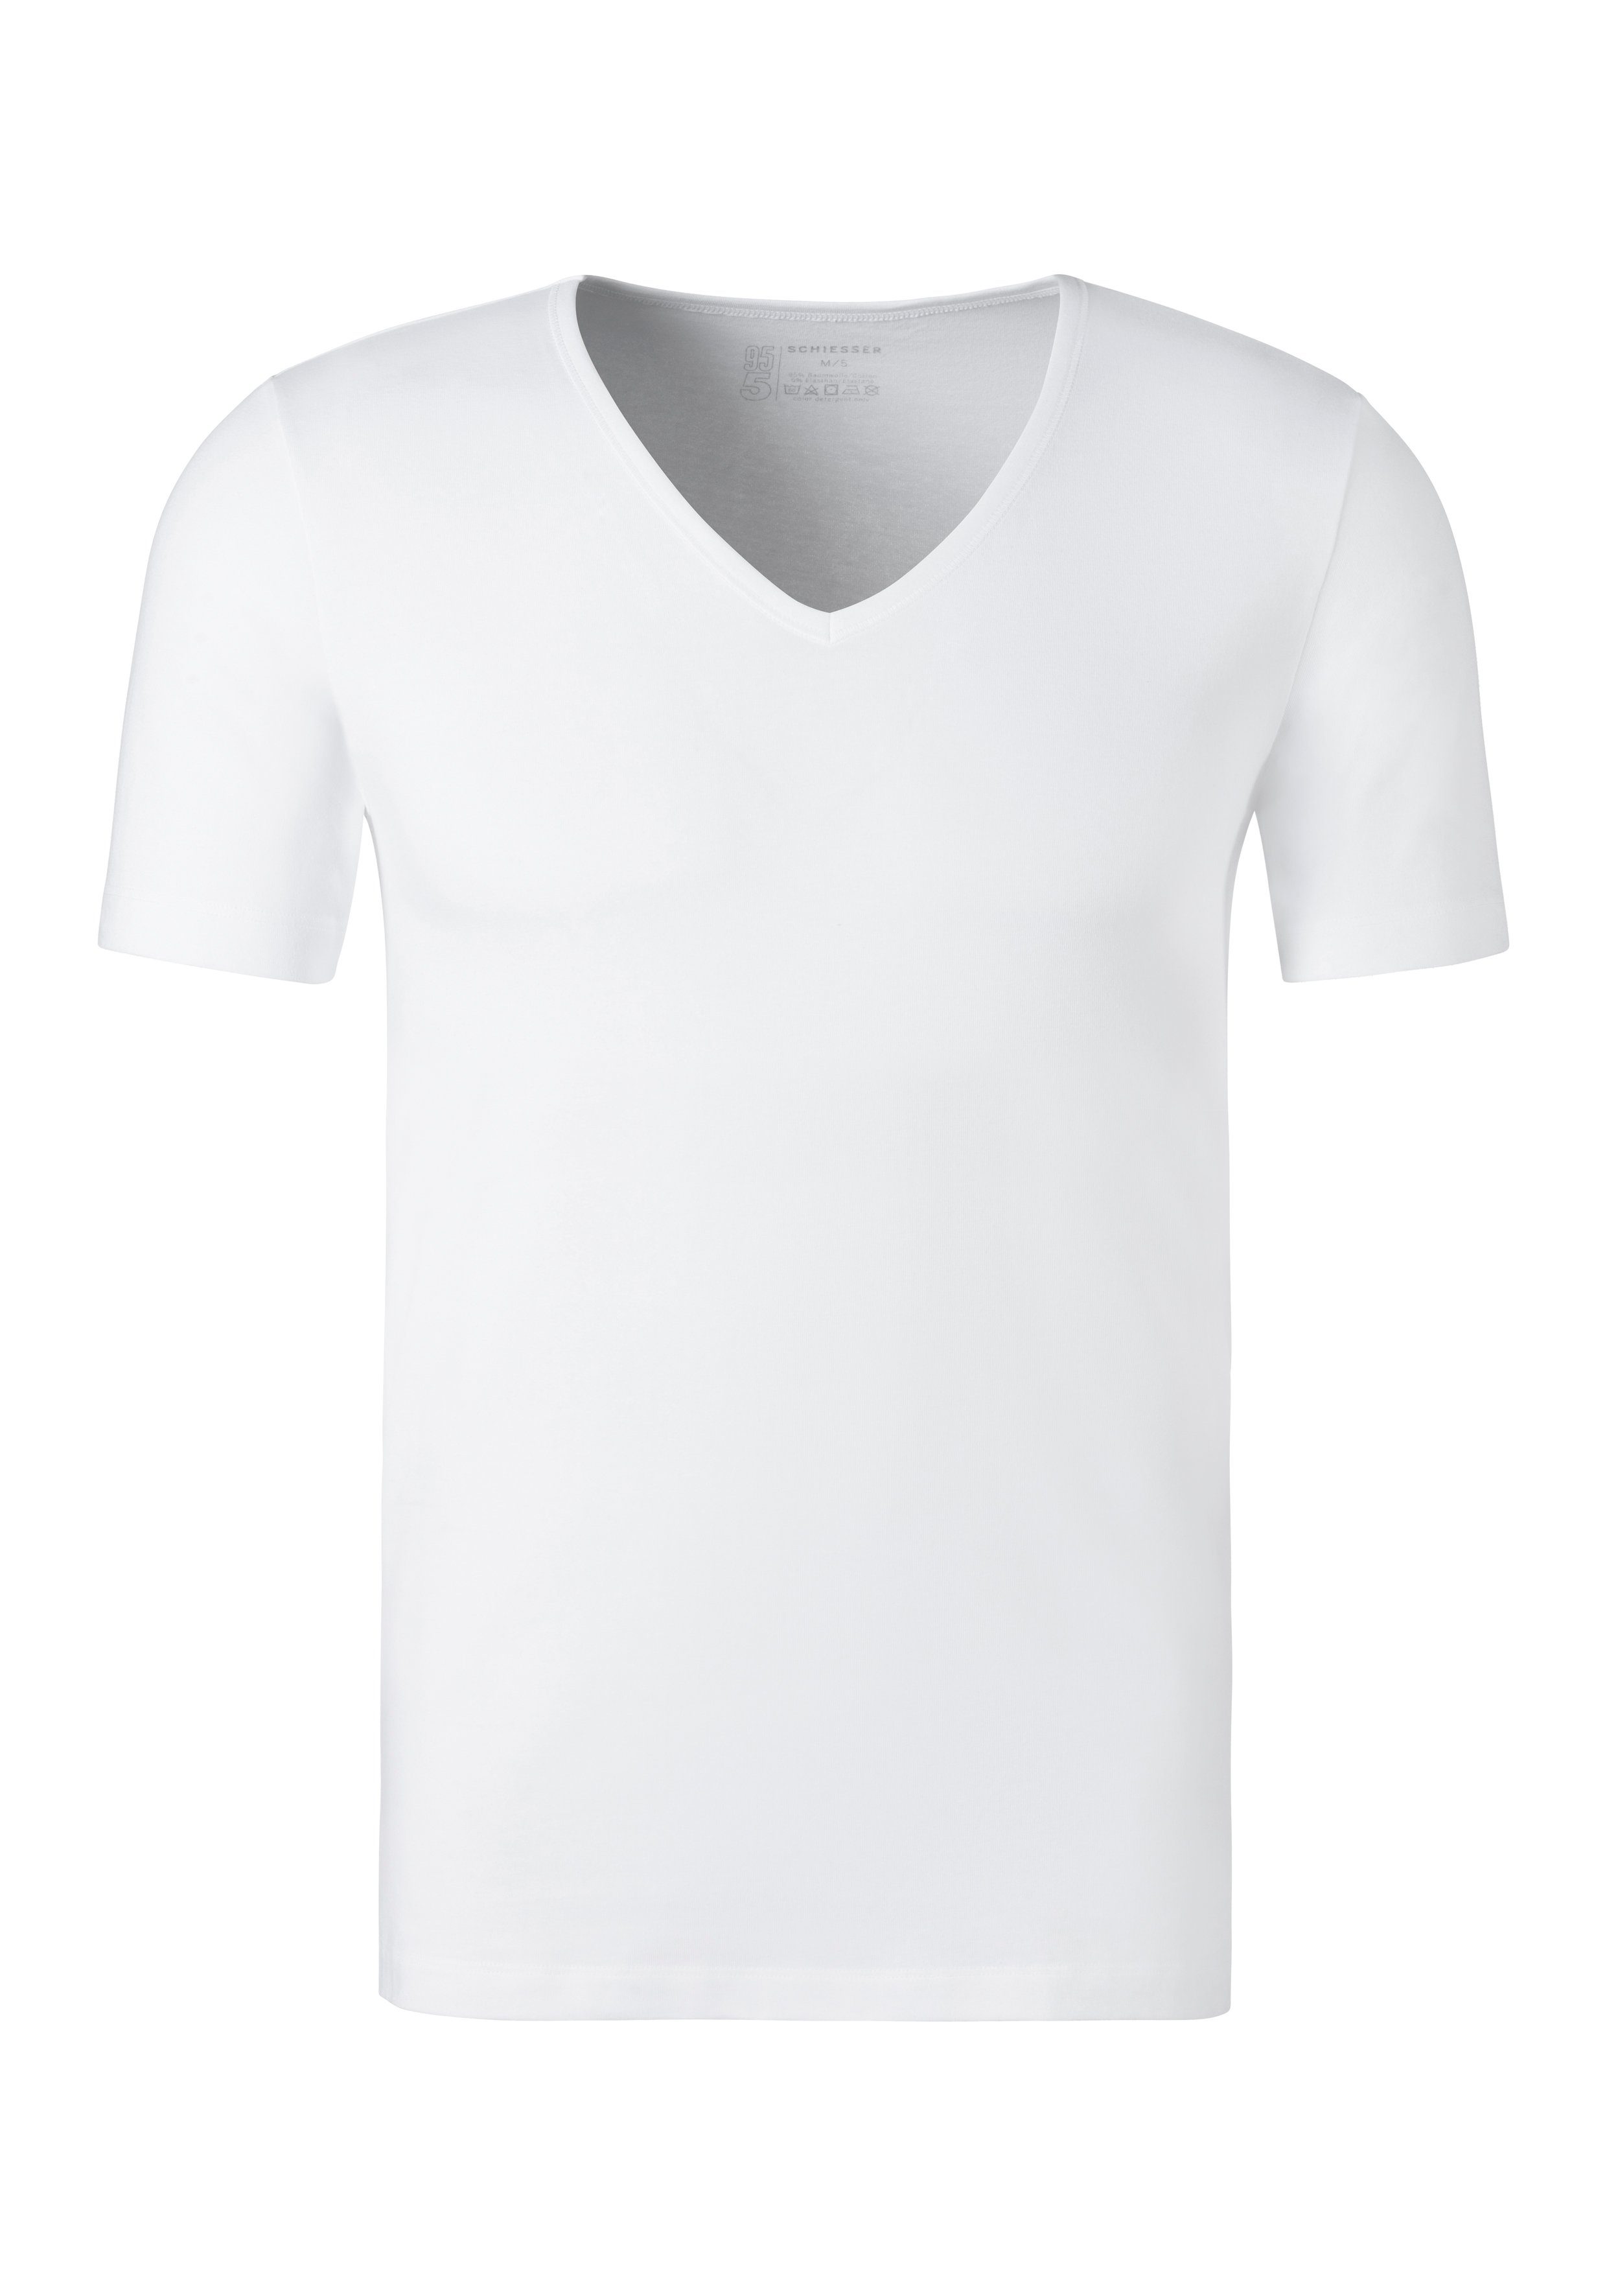 (2er-Pack) V-Shirt weiß V-Ausschnitt Schiesser mit